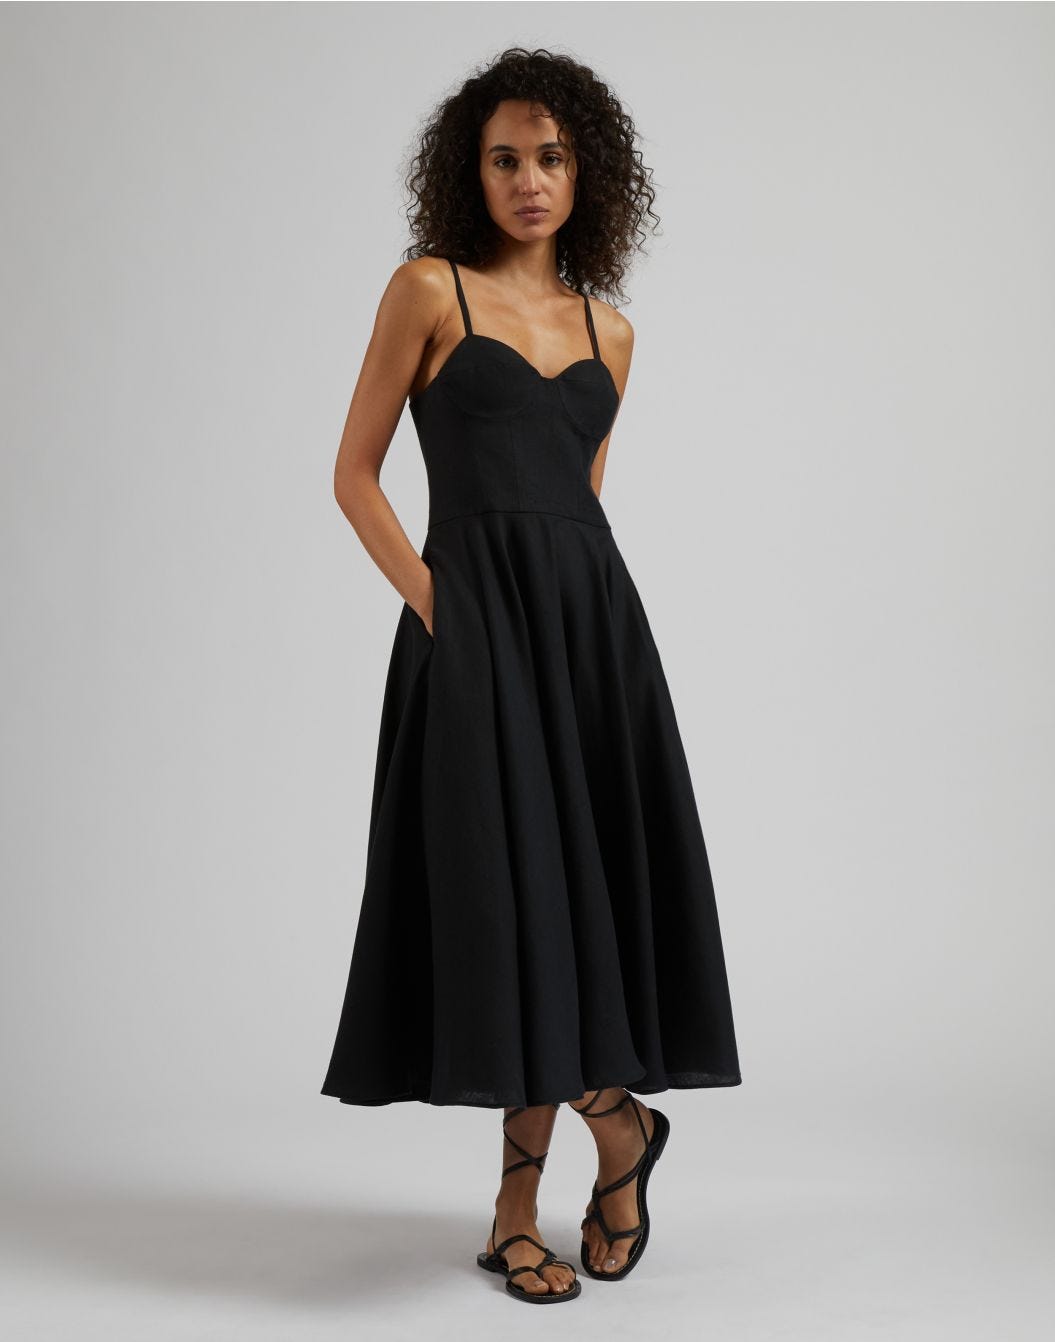 Black linen cloth dress with flared midi skirt